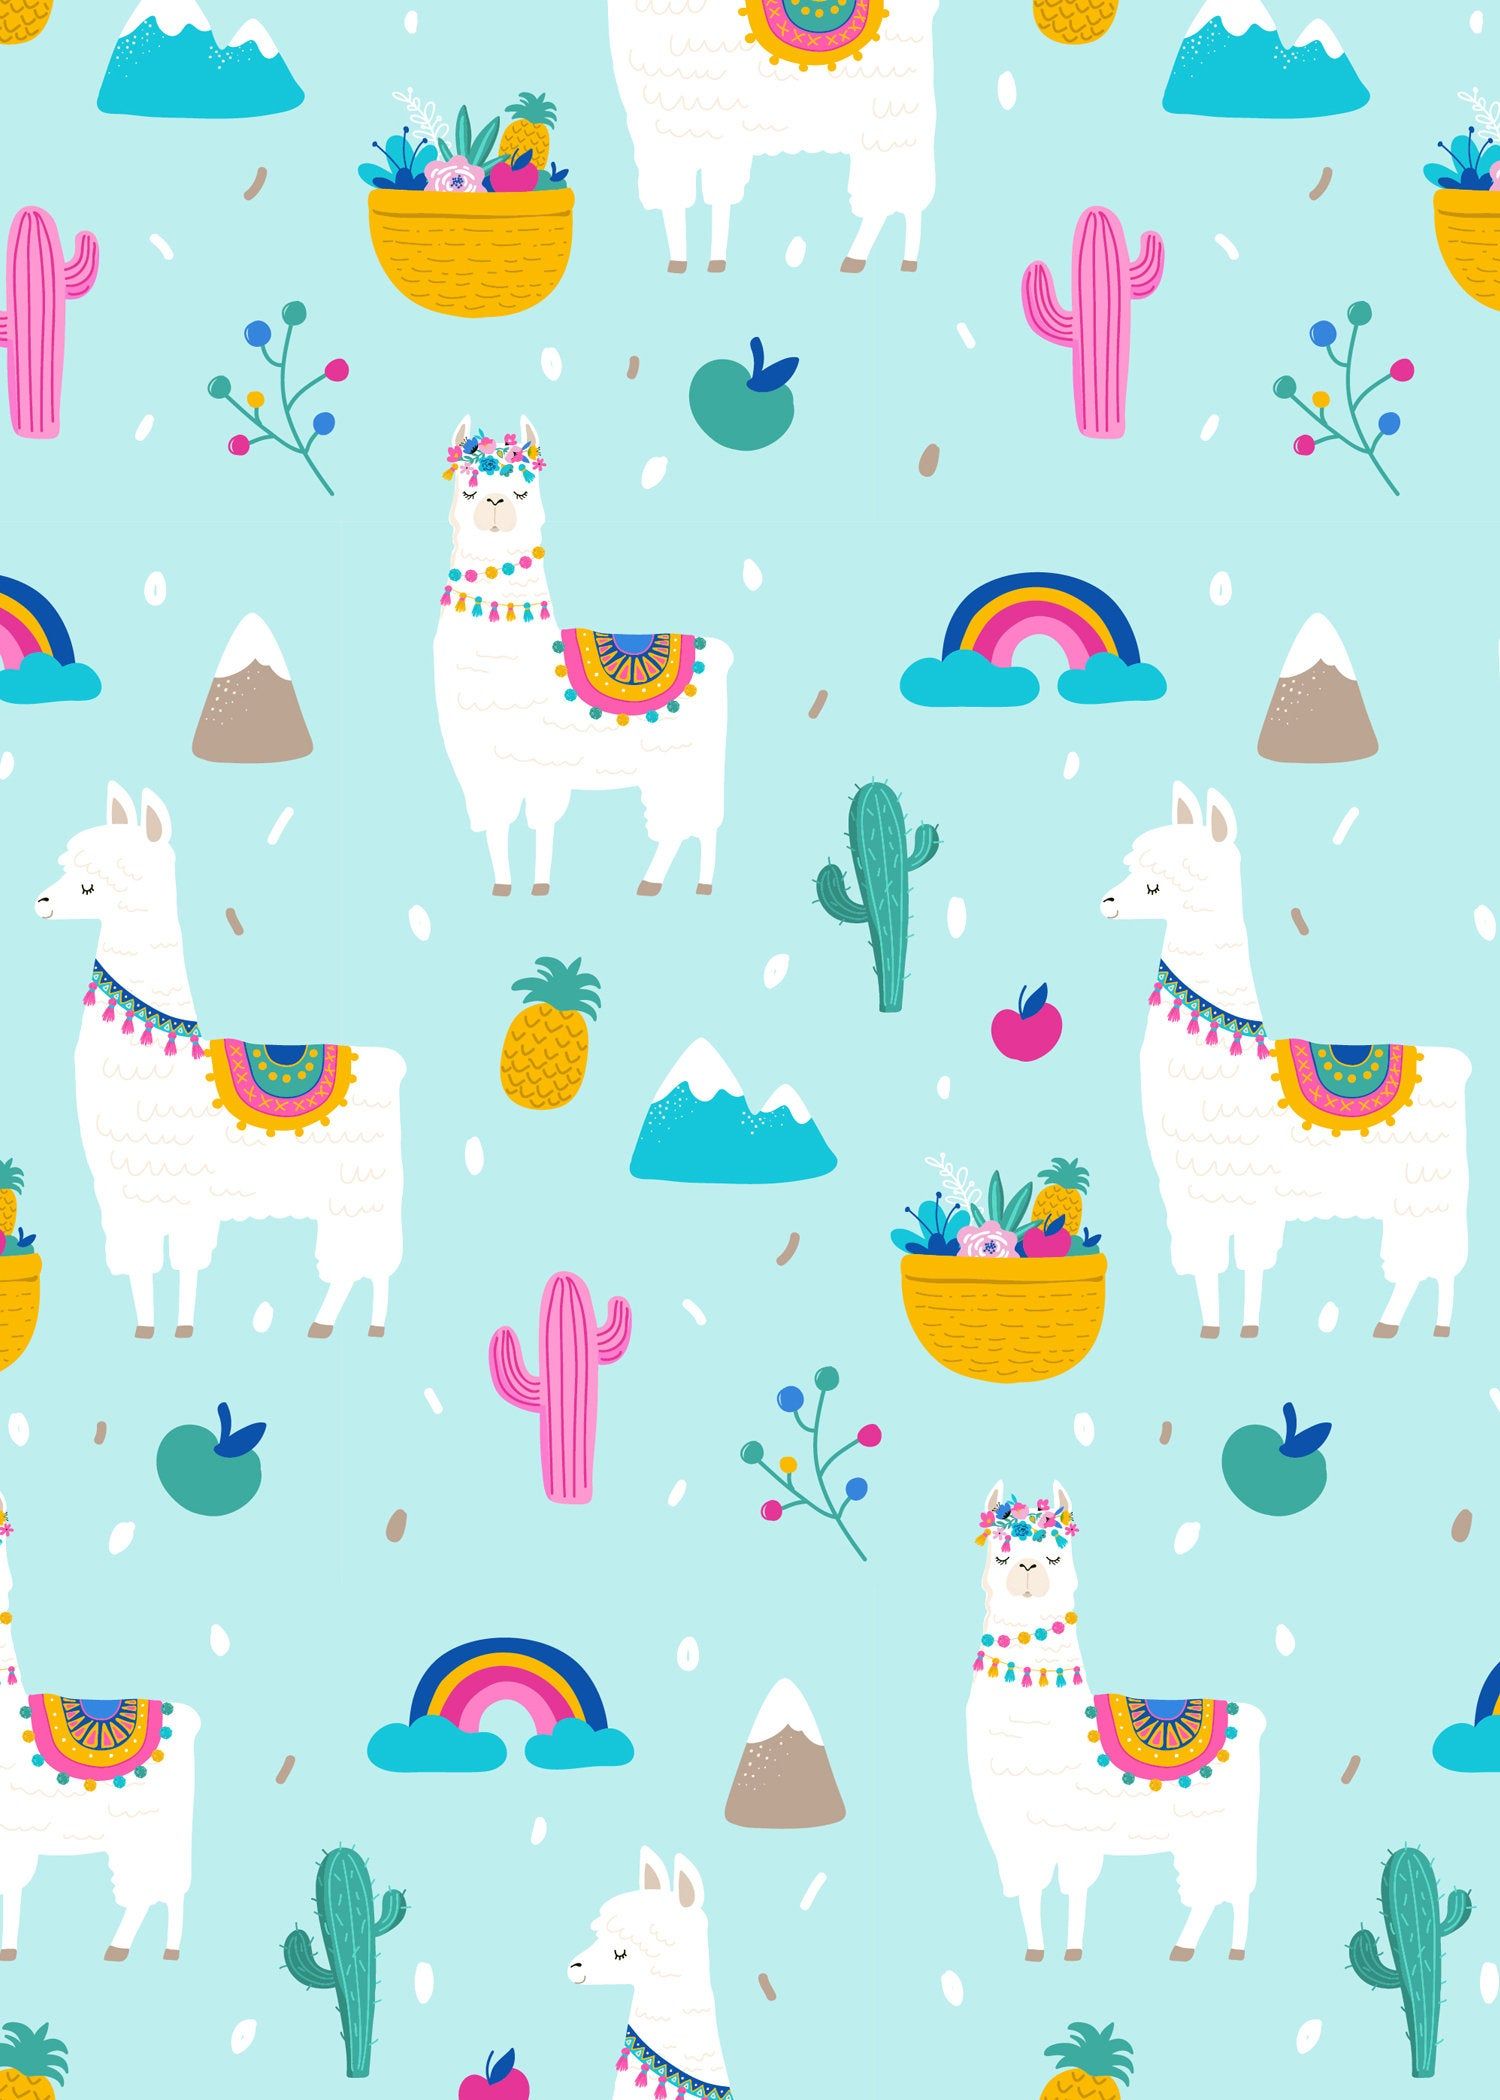 Llama Aesthetic Wallpapers  Funny Llama Wallpapers for iPhone